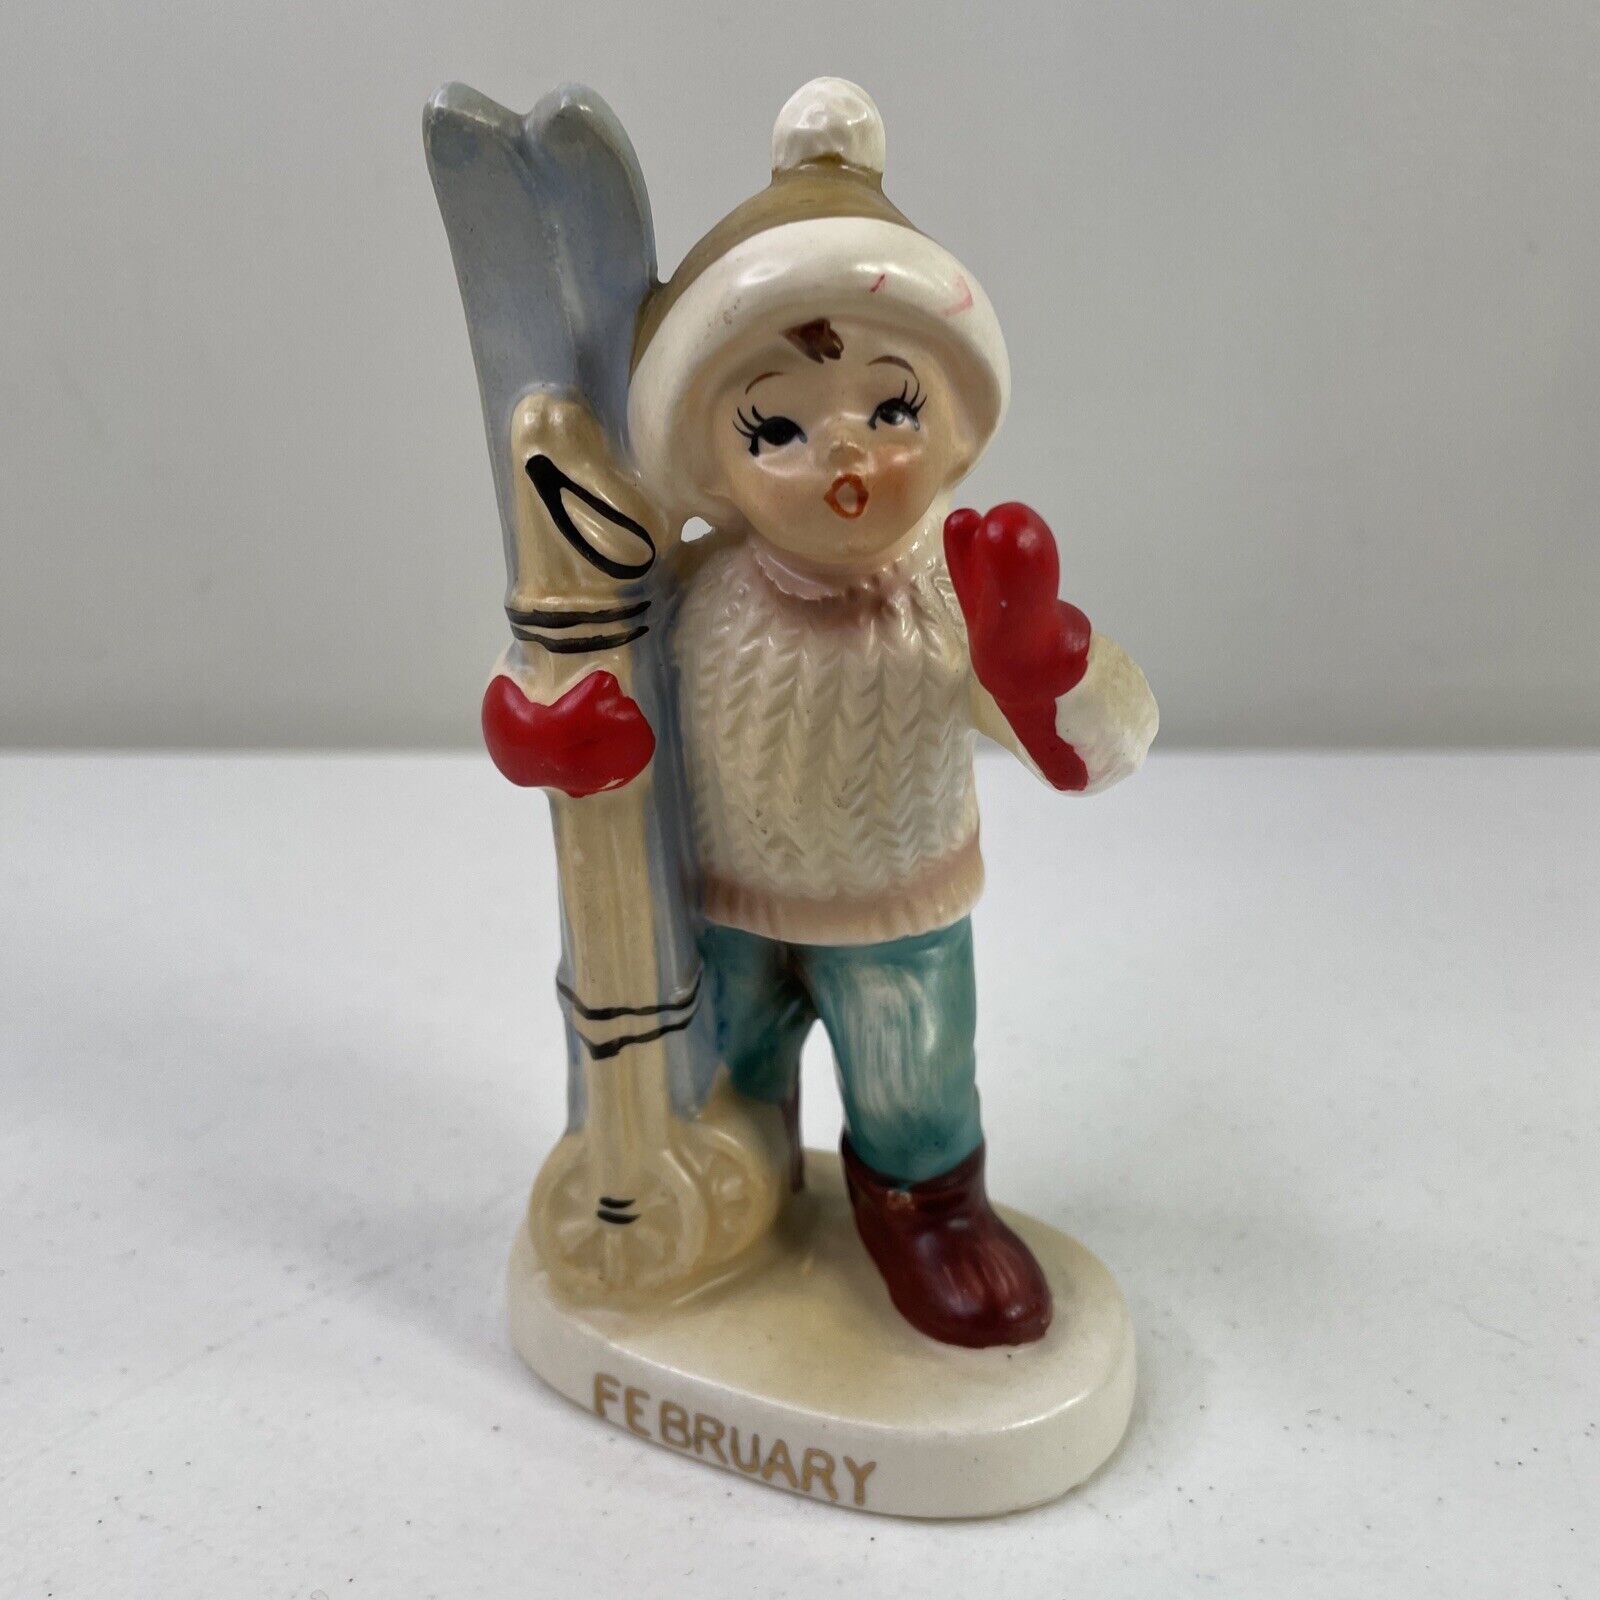 Vintage Lefton February Boy Figurine 2300 Winter Snow Skiing Birthday Month 5”